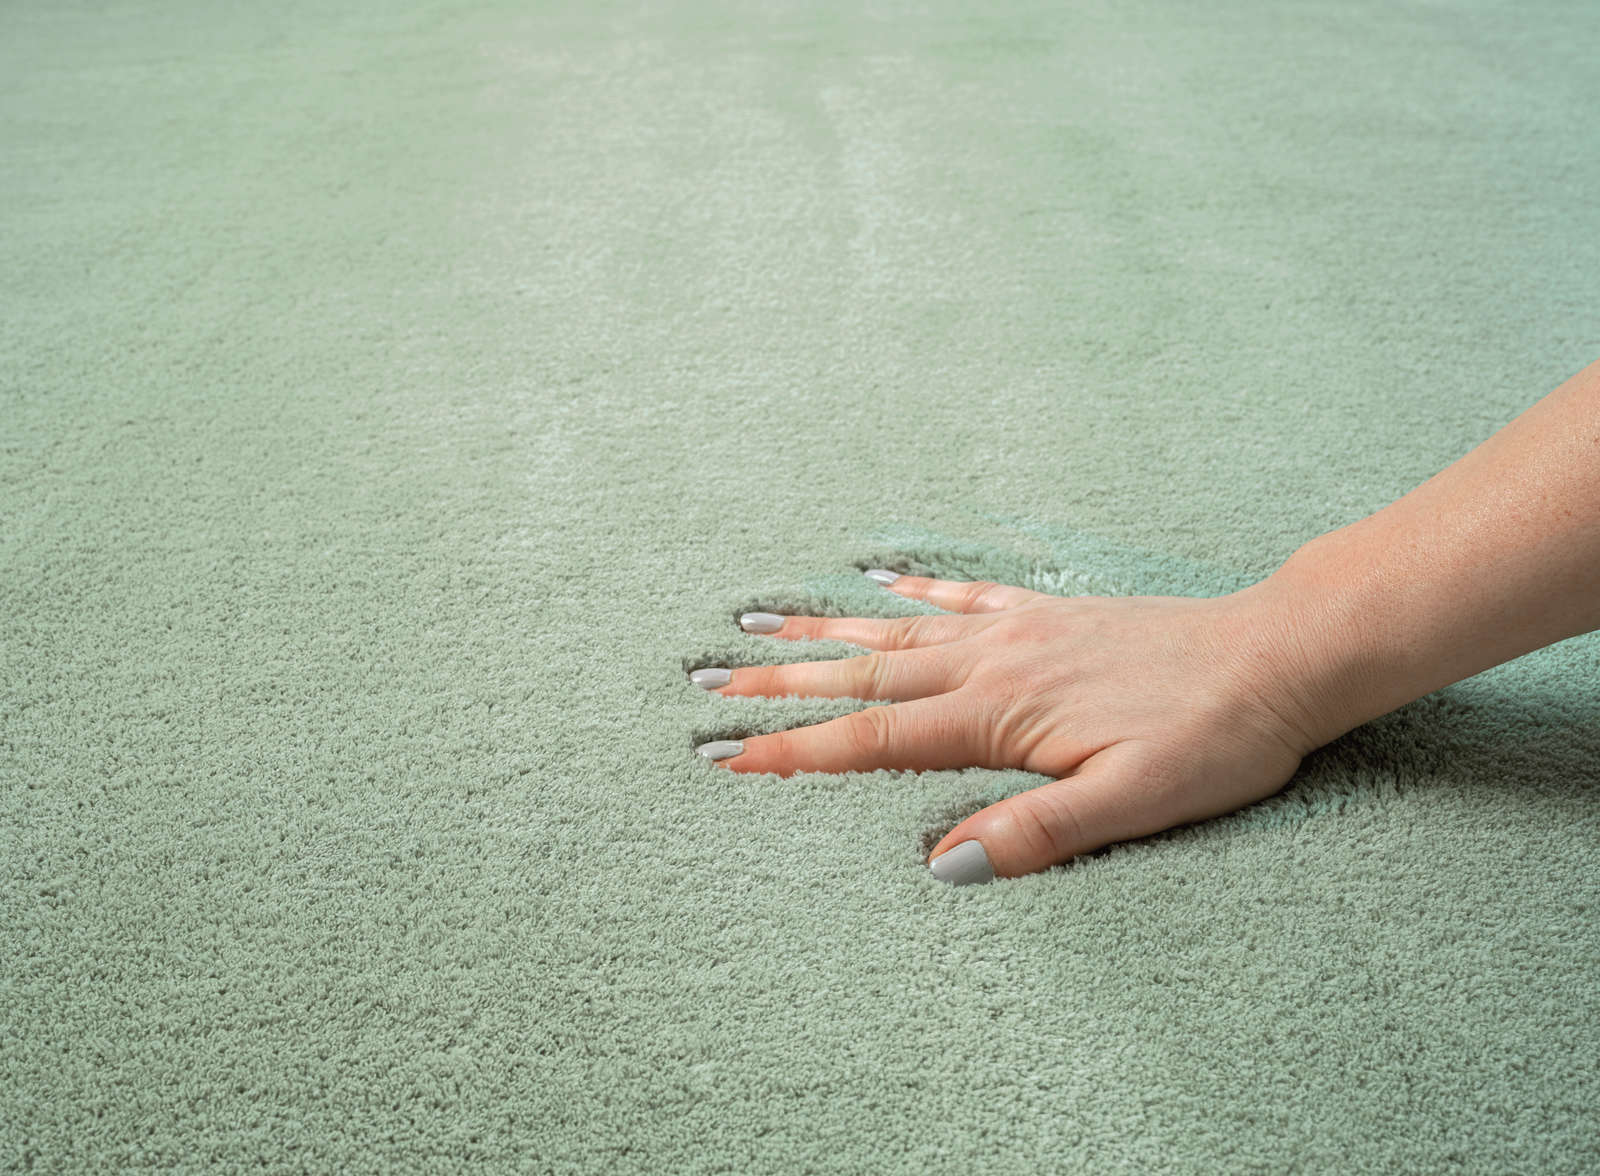             Soft high pile carpet in green - 290 x 200 cm
        